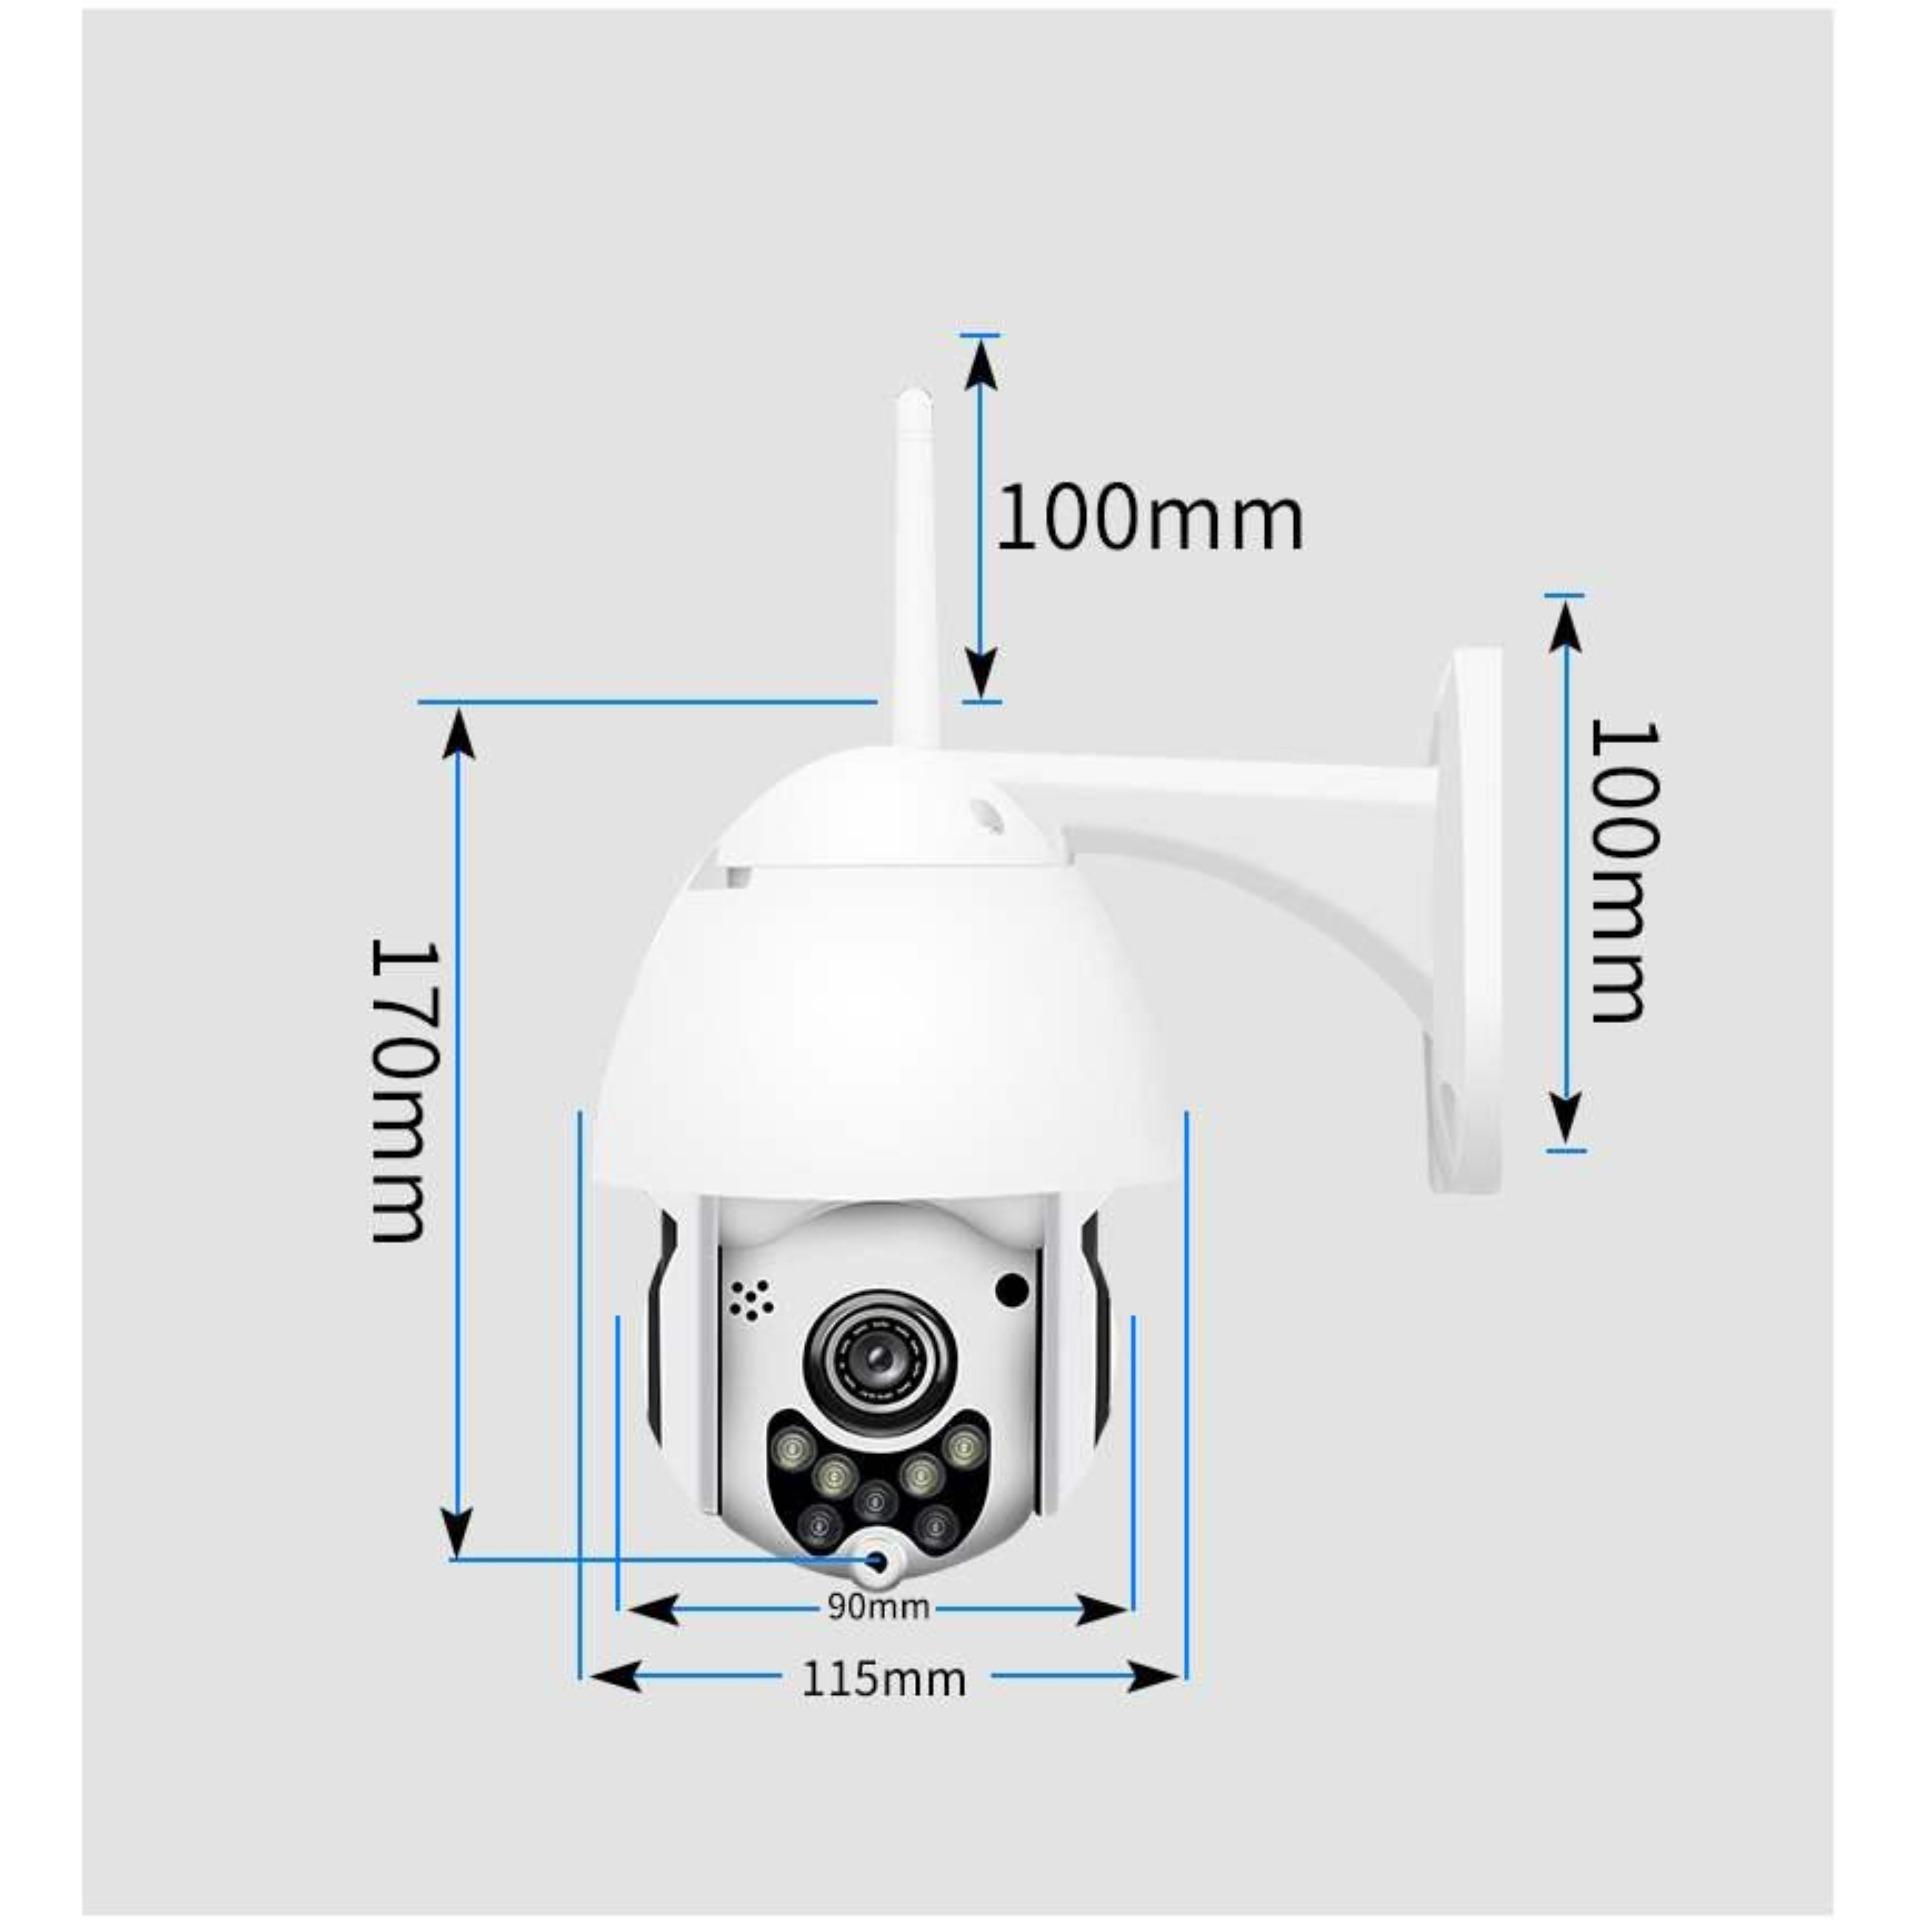 Camera quan sát , Camera giám sát - Camera an ninh 1080p PTZ hồng ngoại cực nét - bảo vệ...